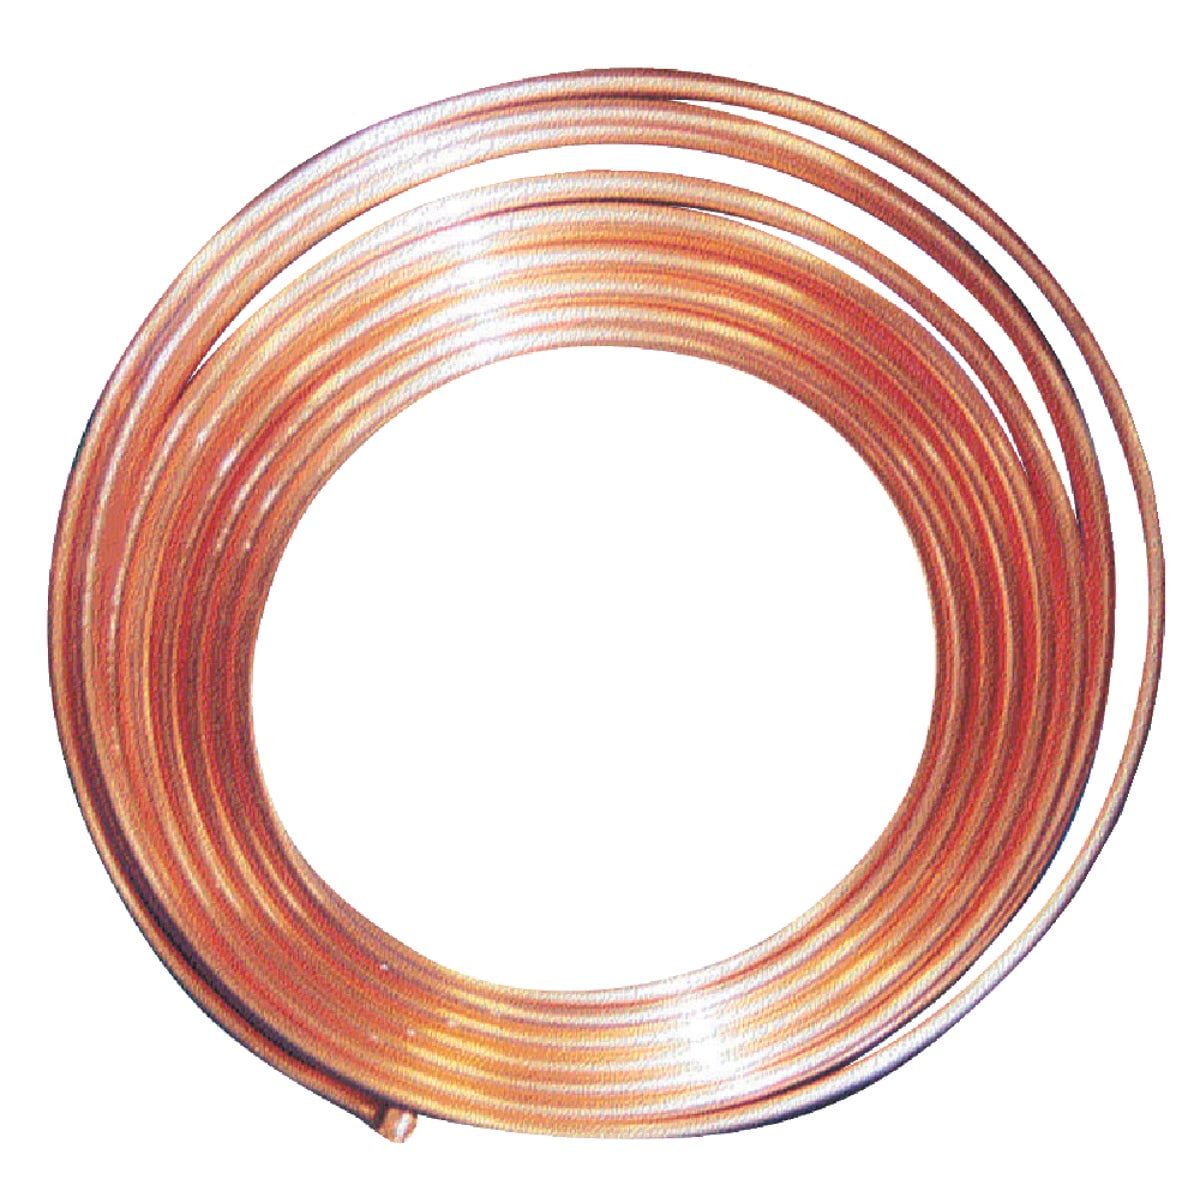 10' Length 3/8" Flexible Copper Tubing 